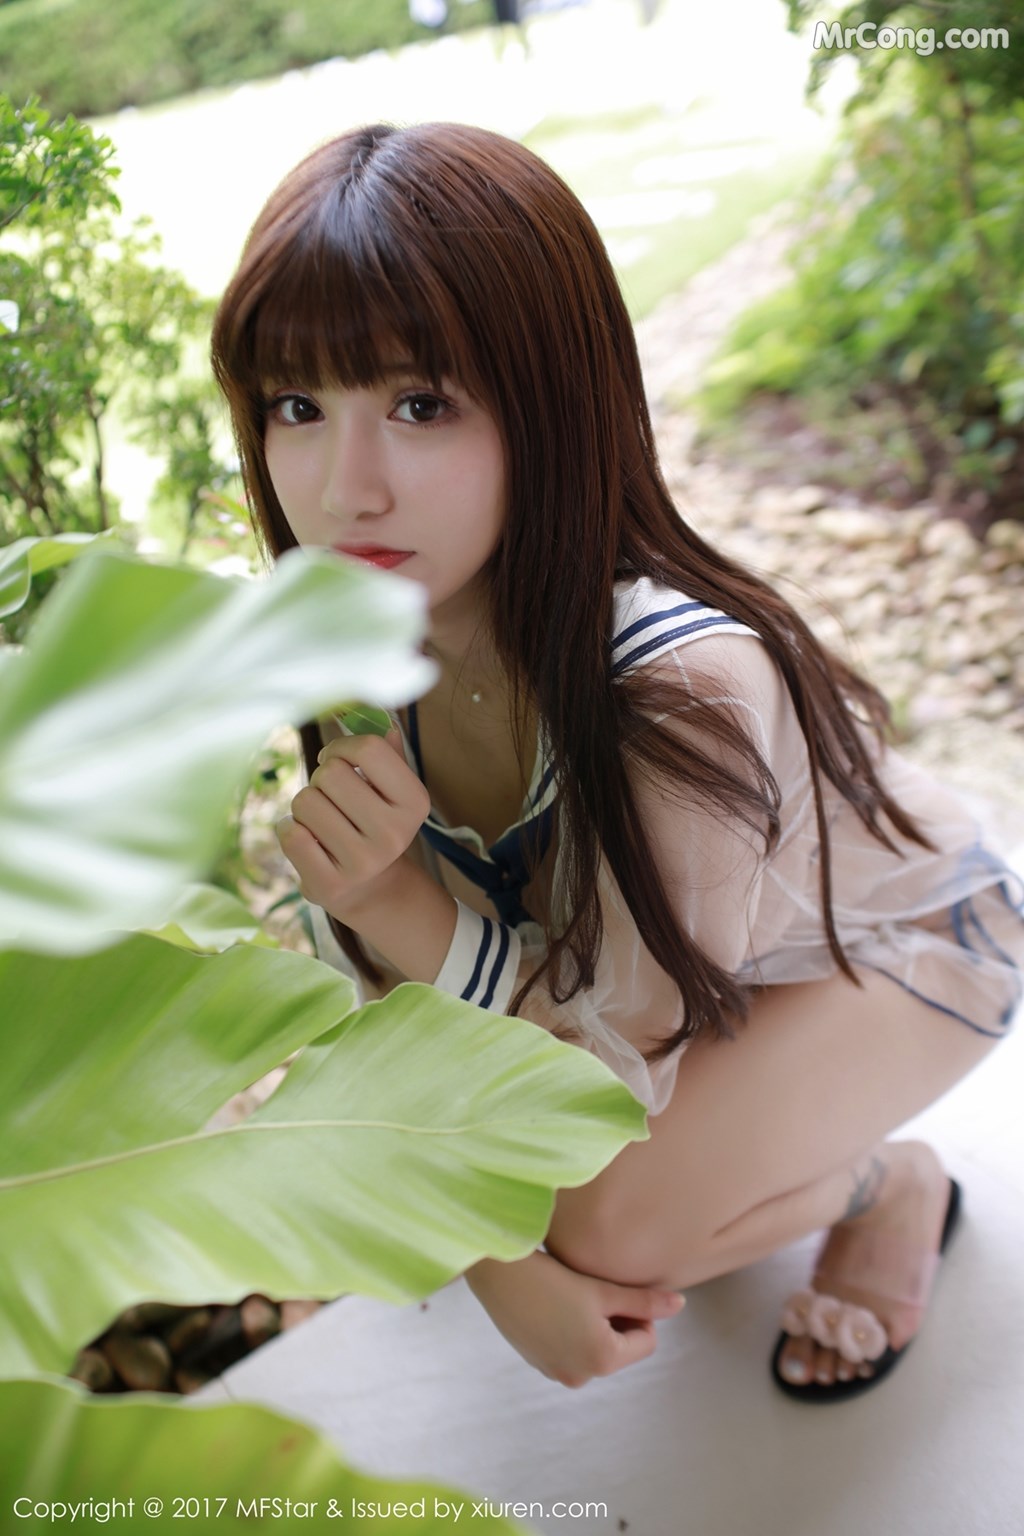 MFStar Vol.105: Model Aojiao Meng Meng (K8 傲 娇 萌萌 Vivian) (46 photos) photo 2-8